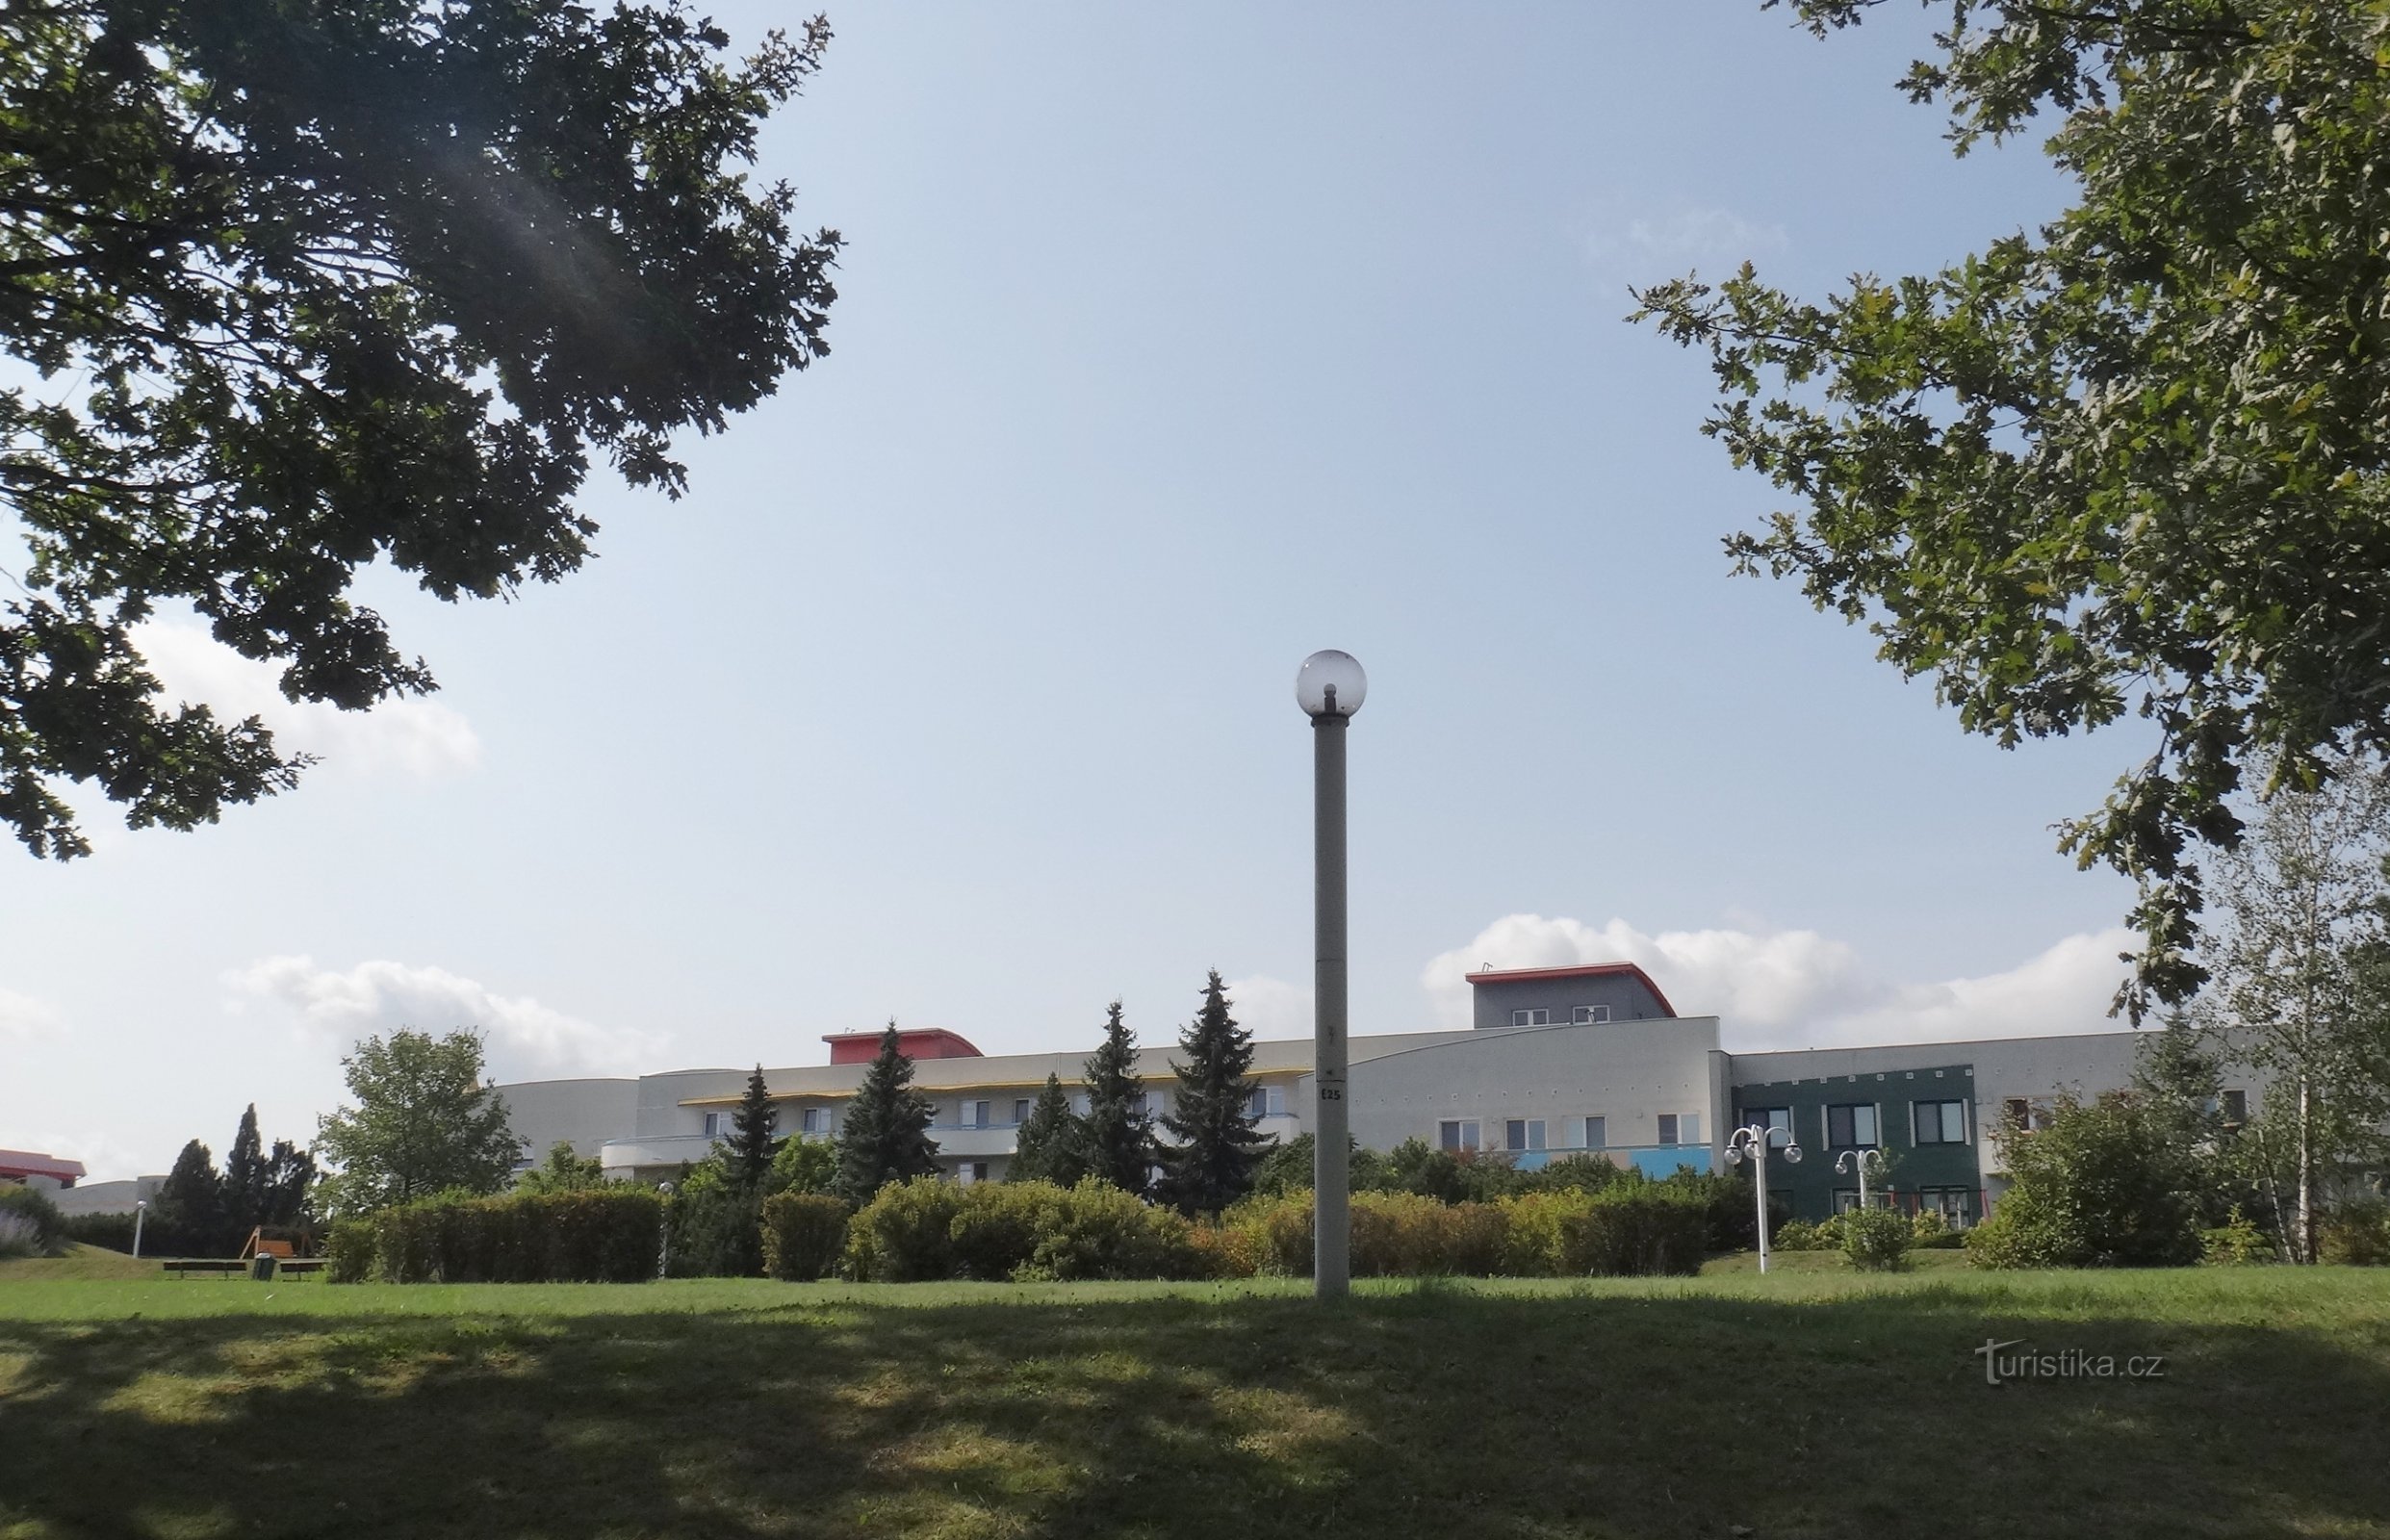 Klimkovice - station thermale